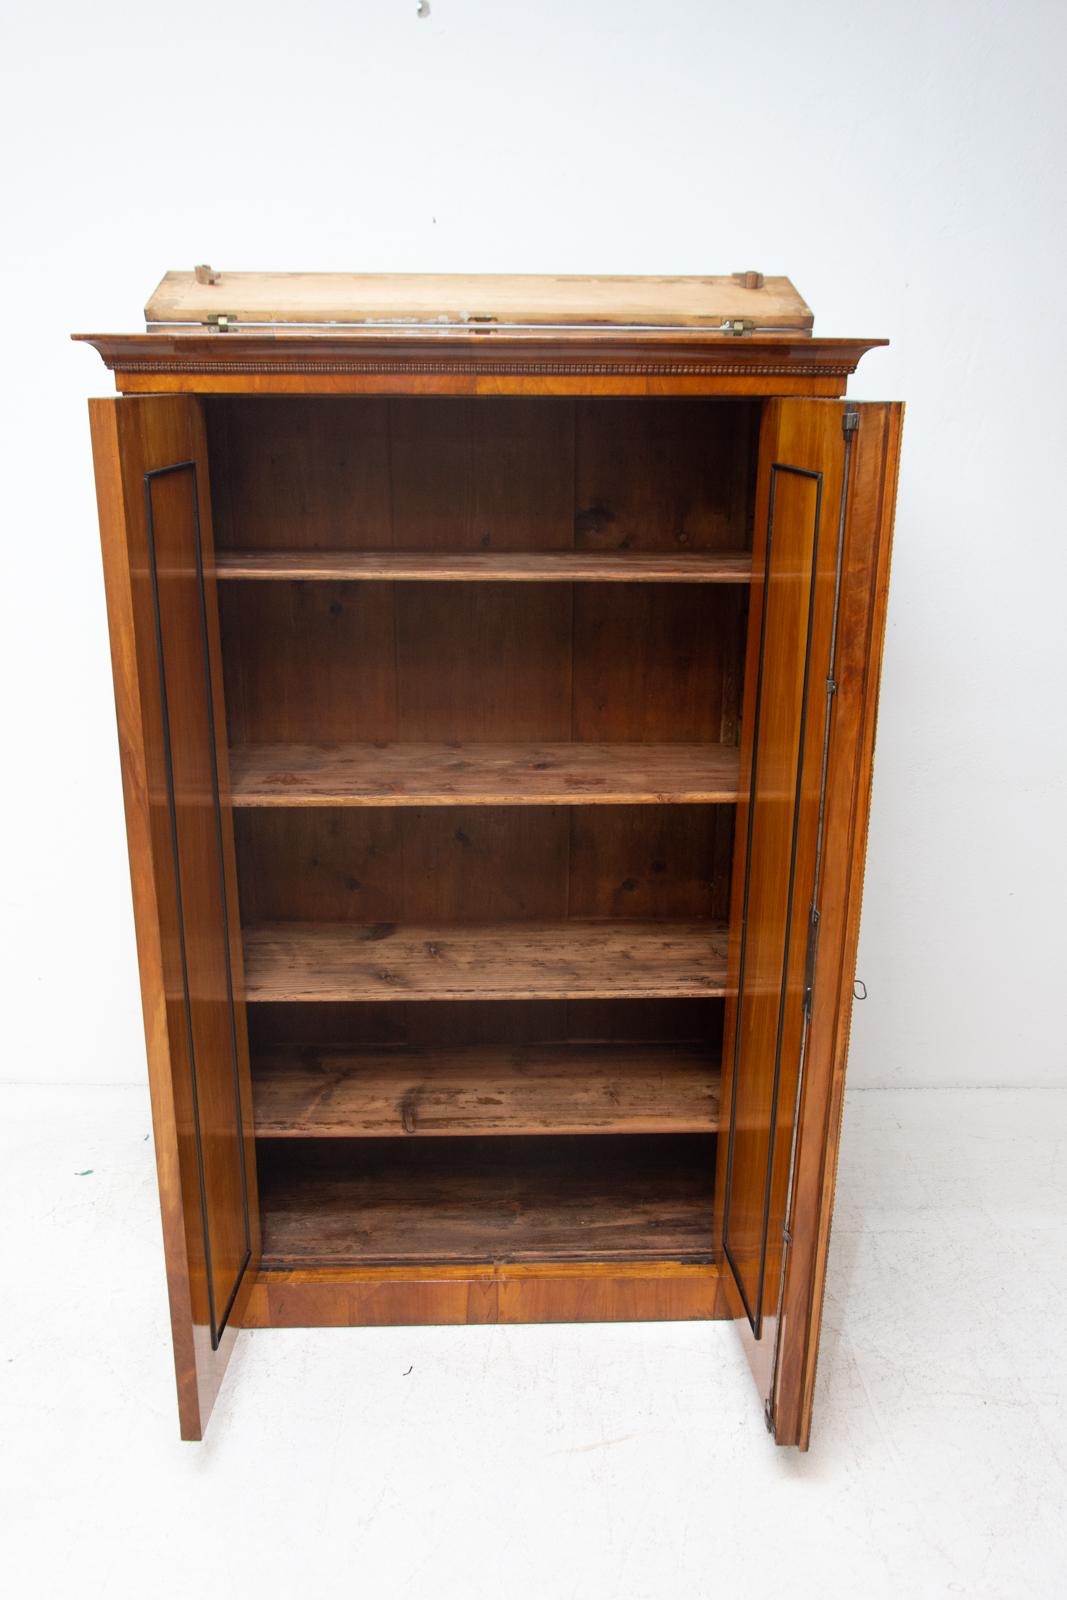 Antique Biedermeier Shelf Cabinet-Wardrobe, 1830s, Austria-Hungary For Sale 2